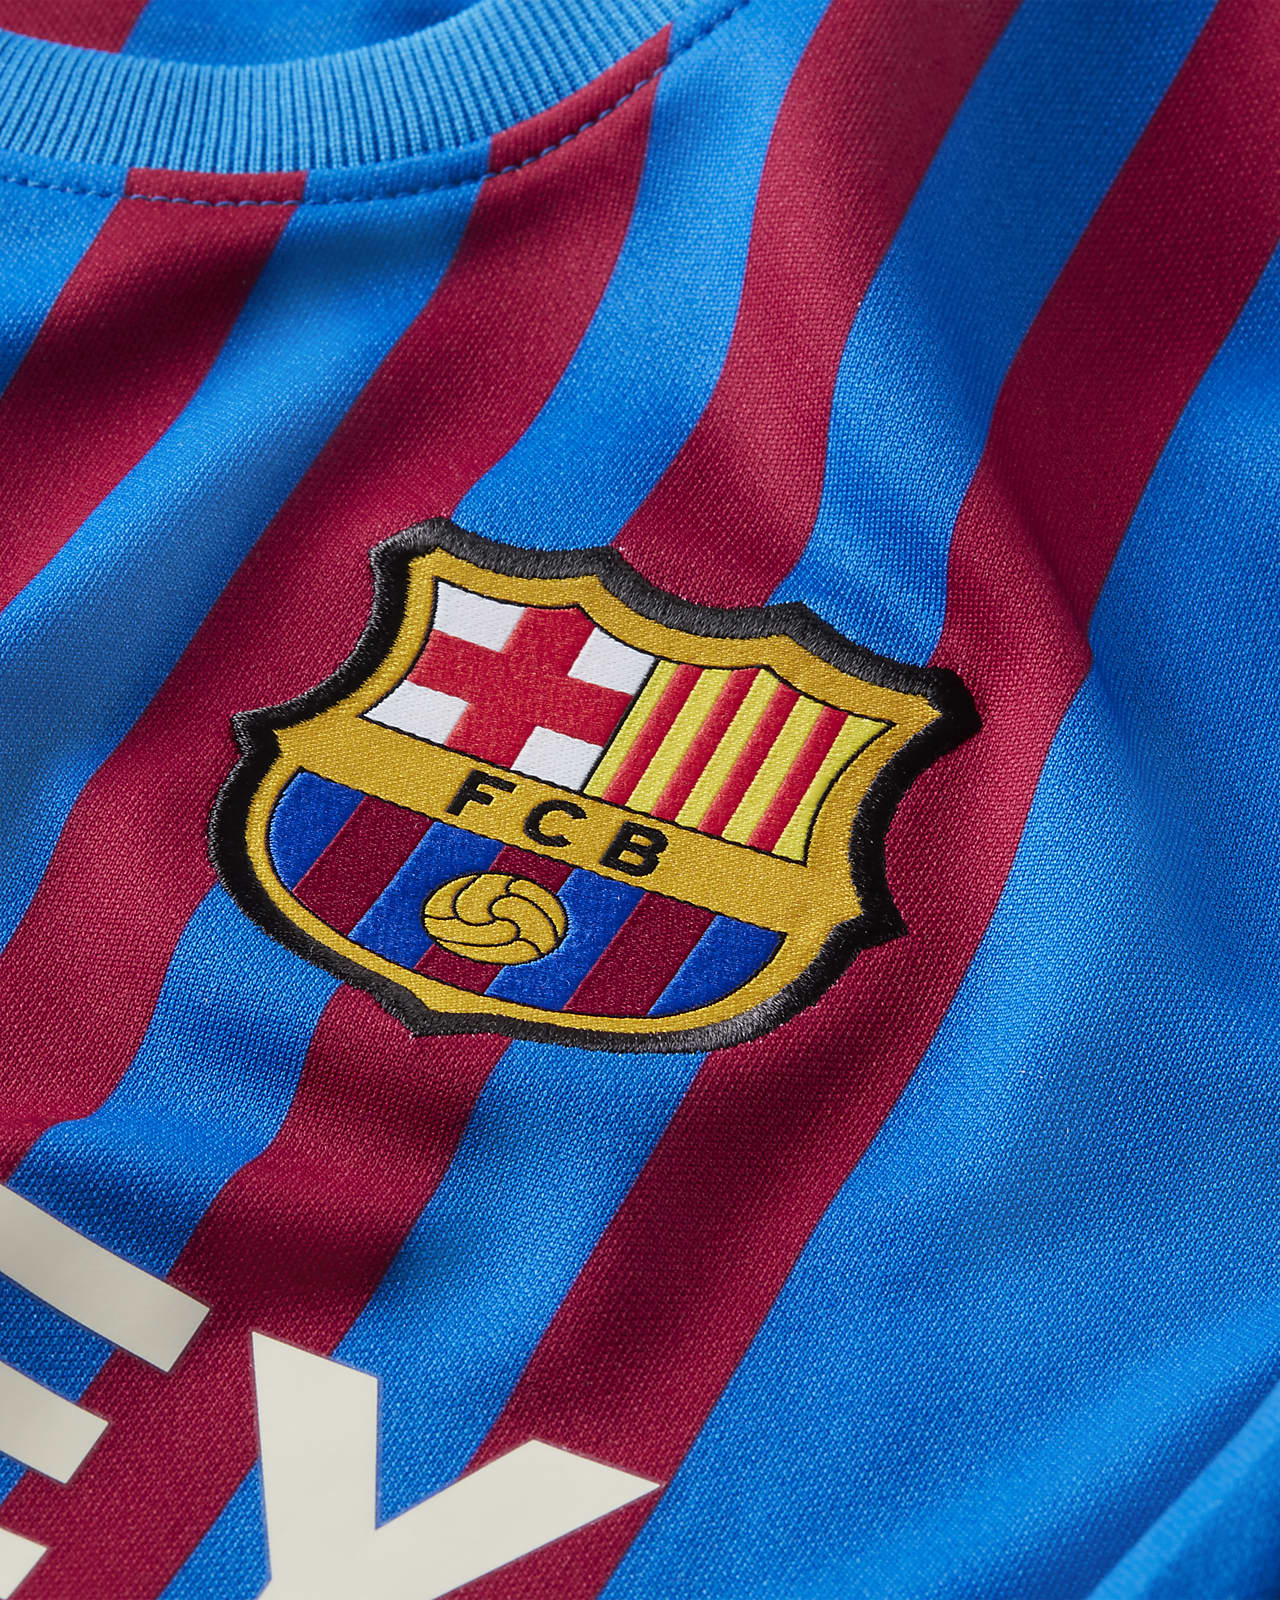 2021 22 barcelona jersey